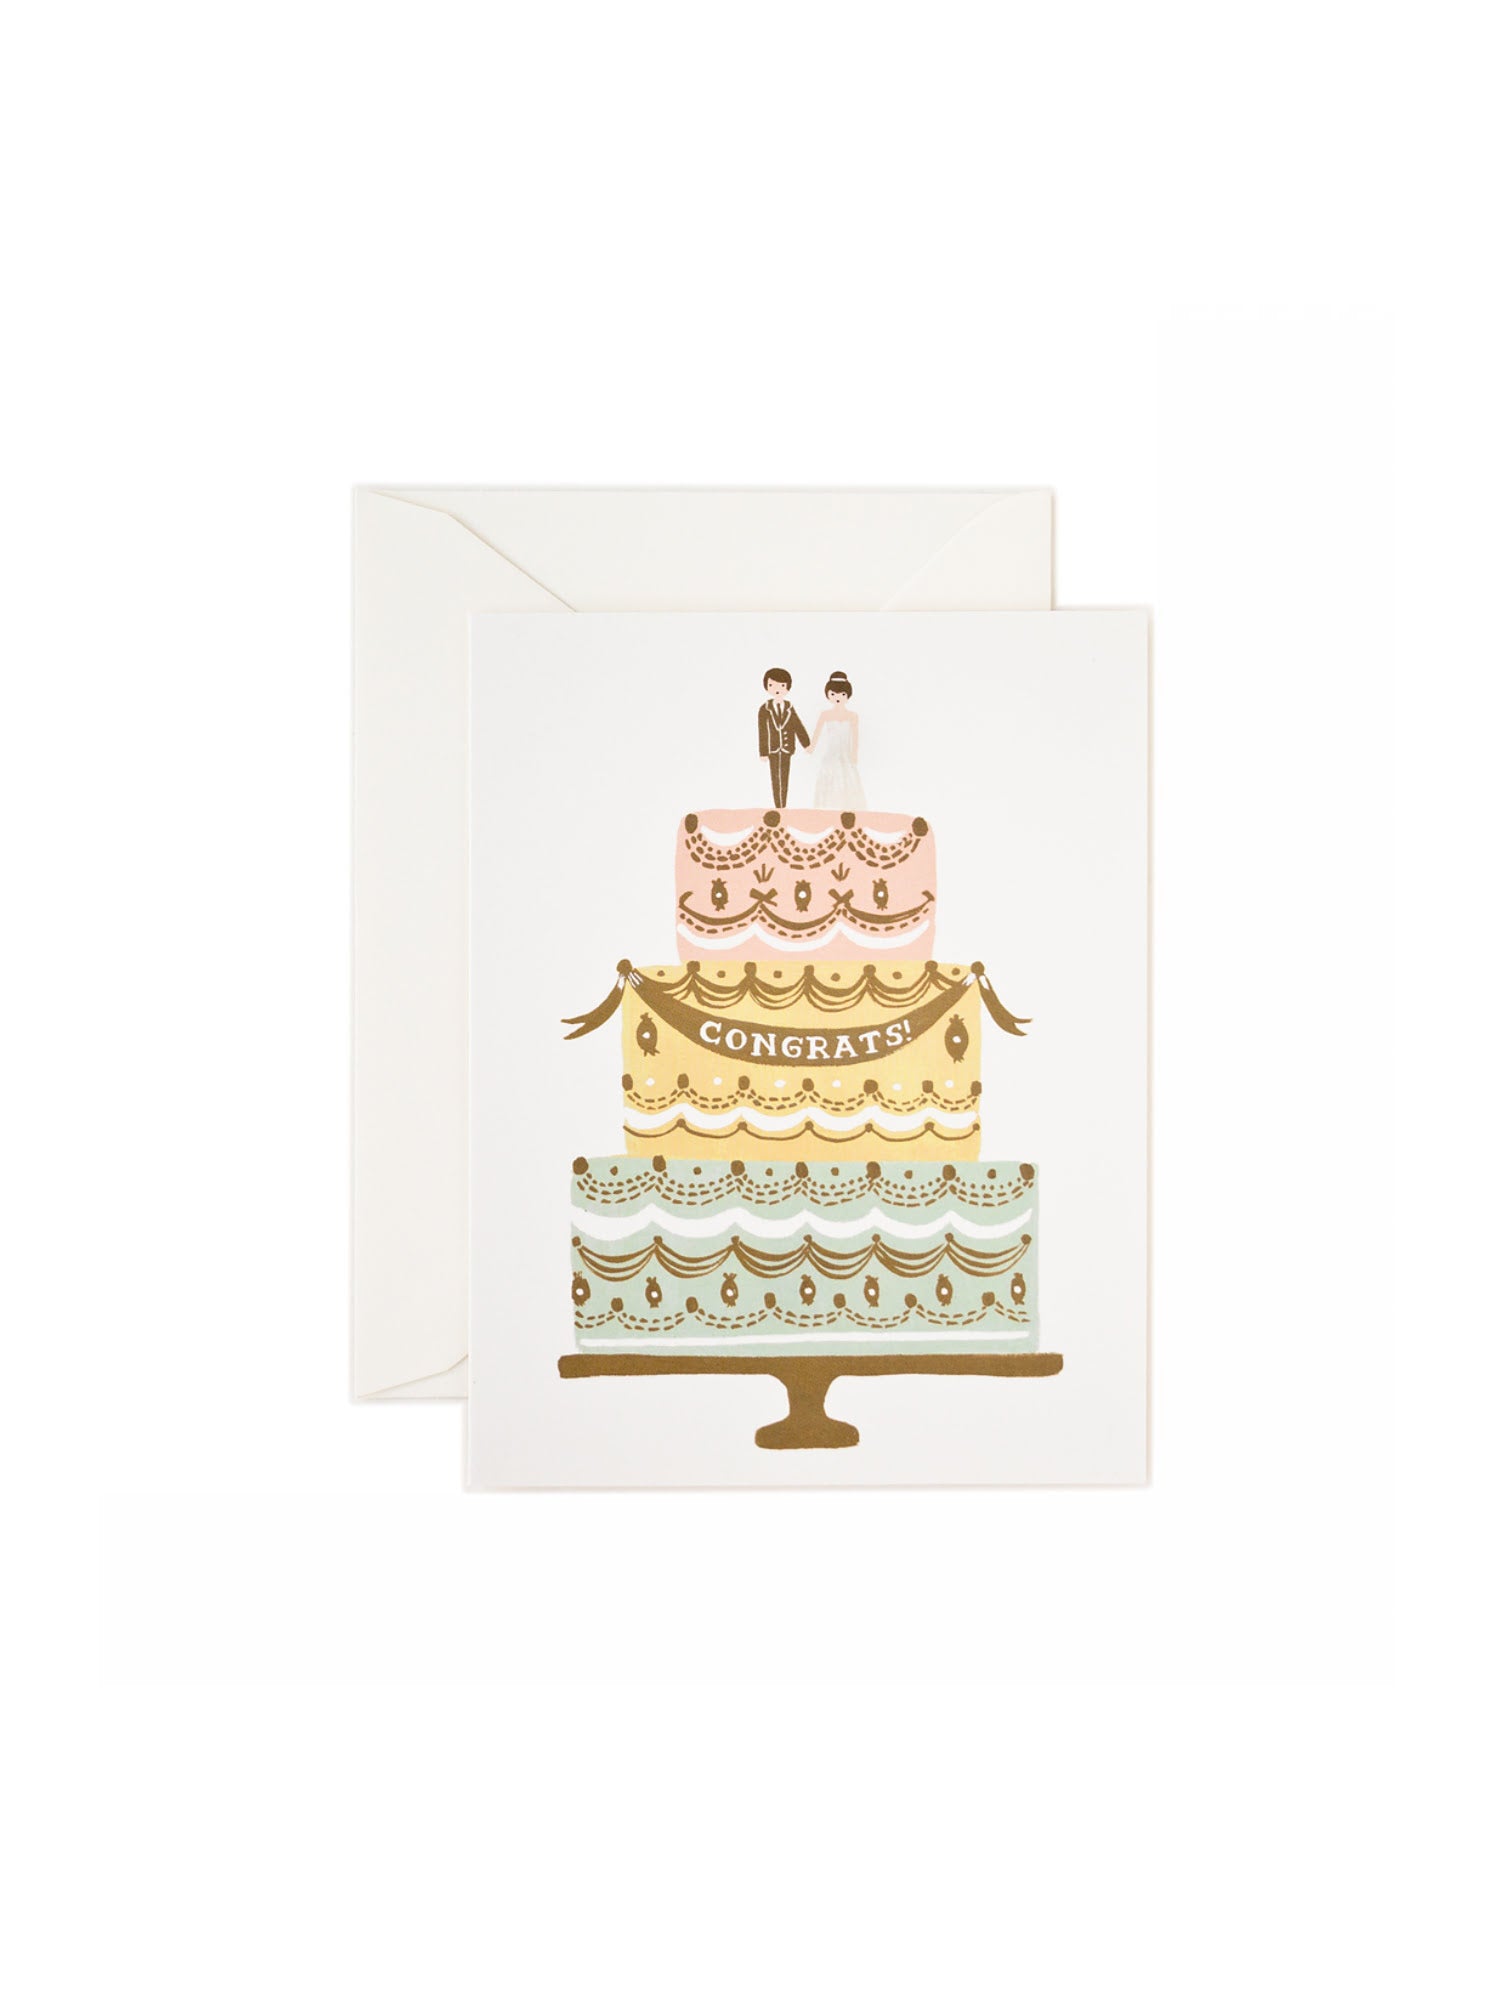 Congrats Wedding Cake kort